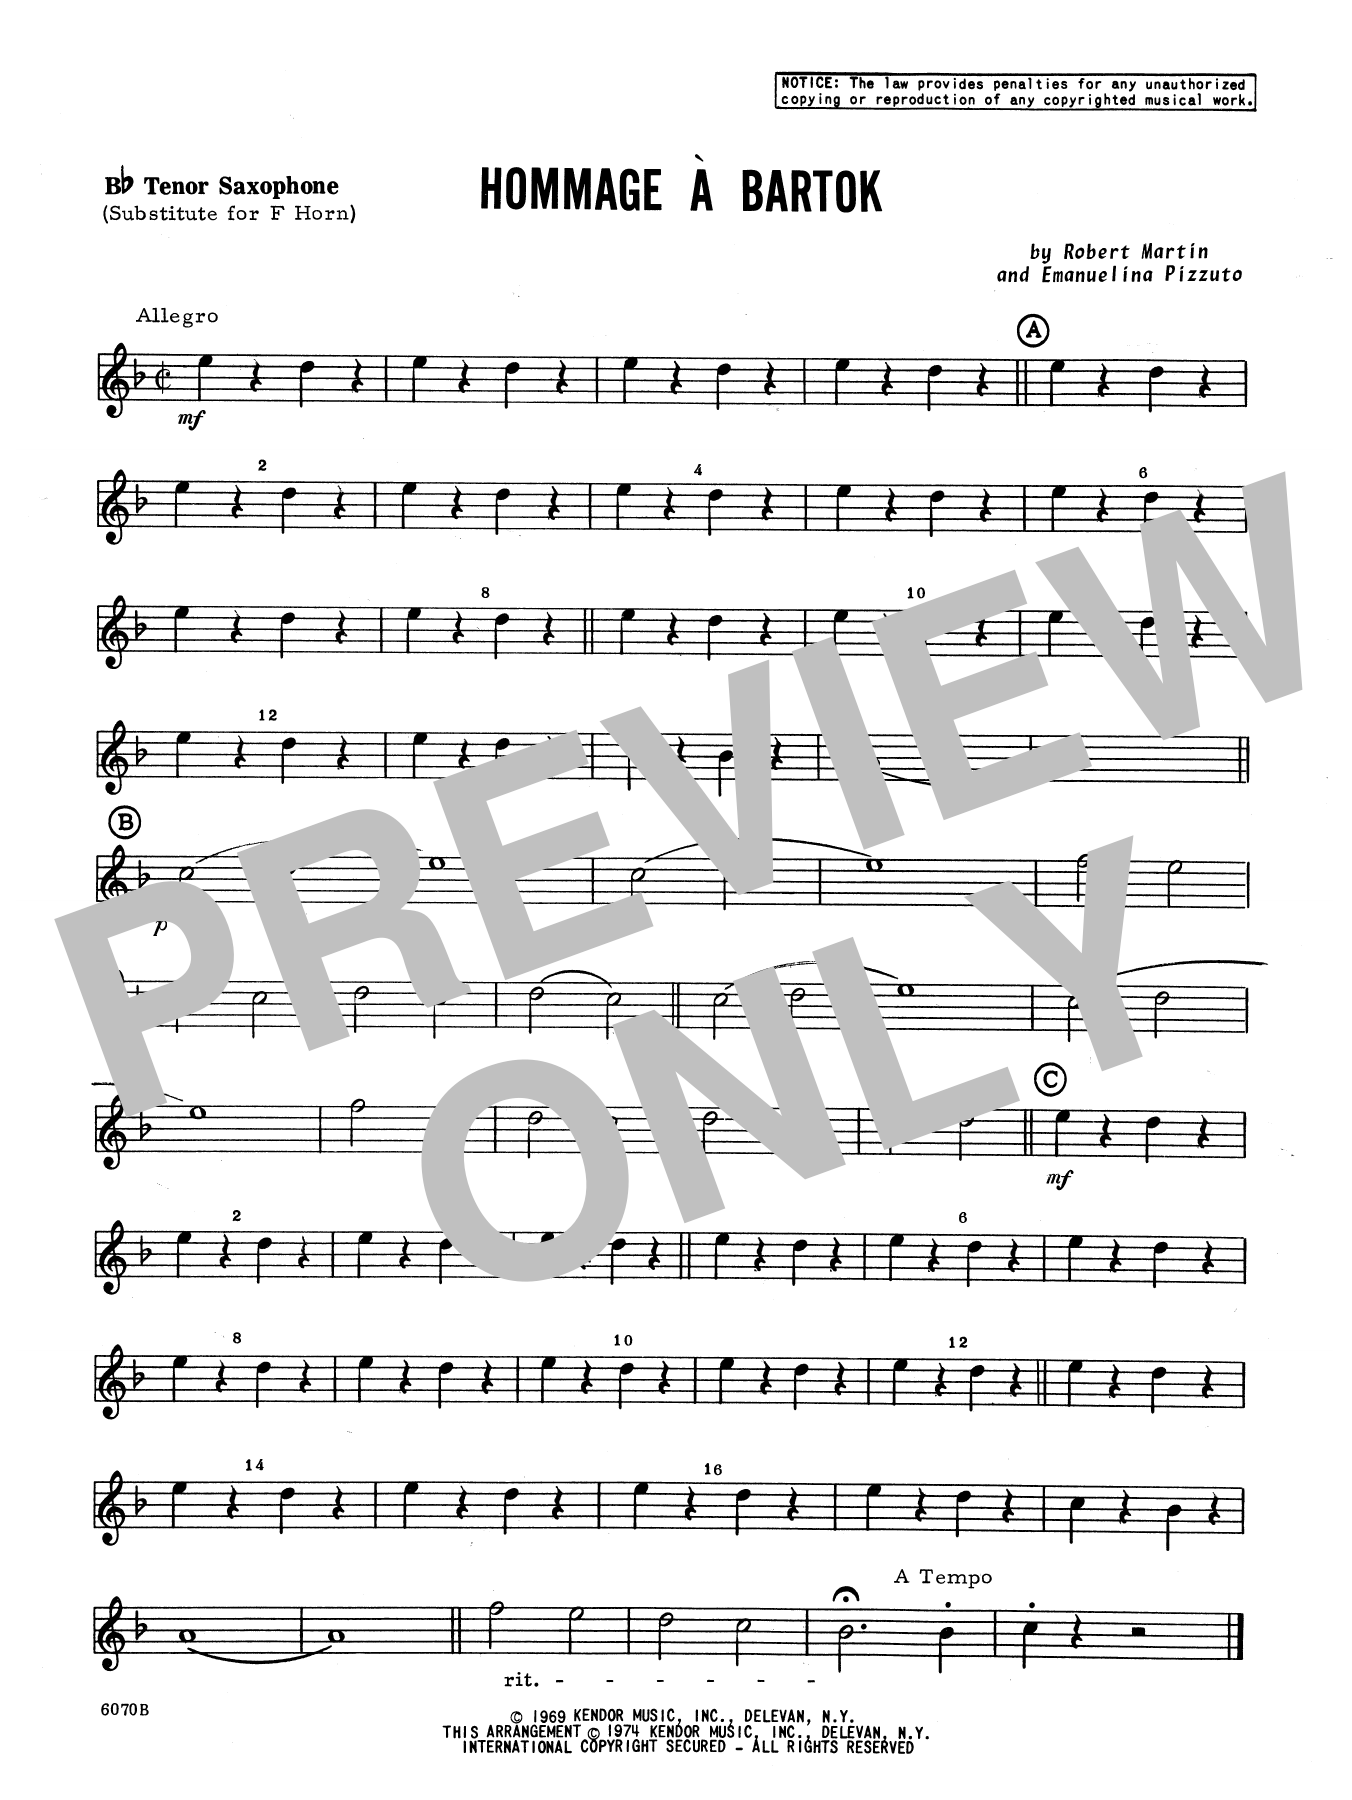 Martin Hommage A Bartok - Bb Tenor Saxophone sheet music notes and chords. Download Printable PDF.